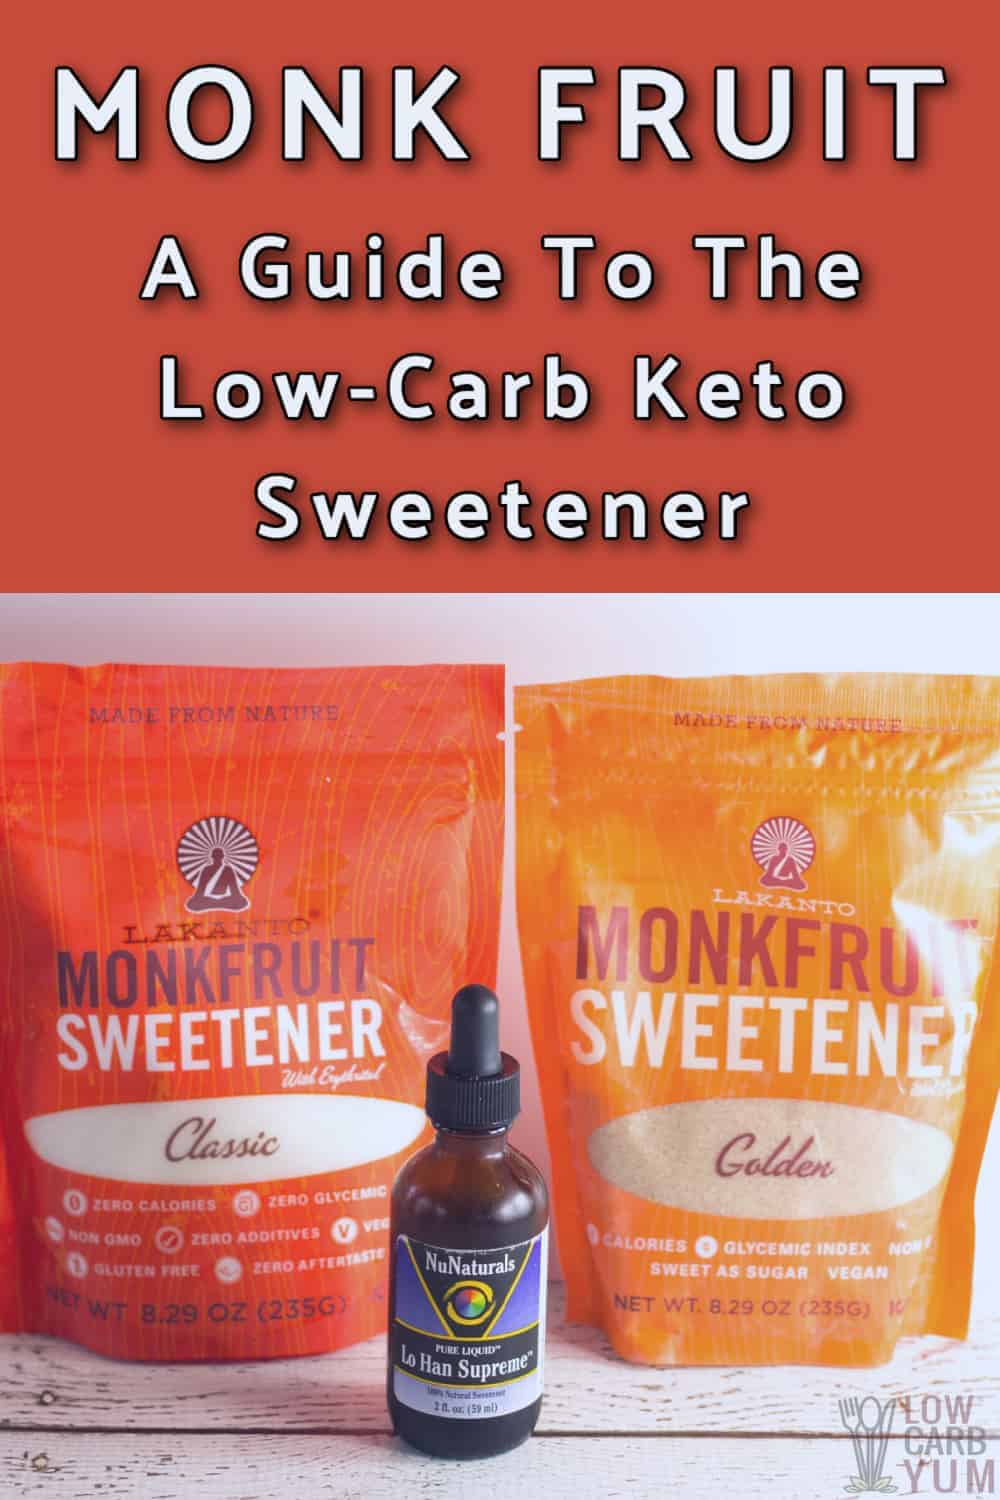 monk fruit sweetener guide cover image